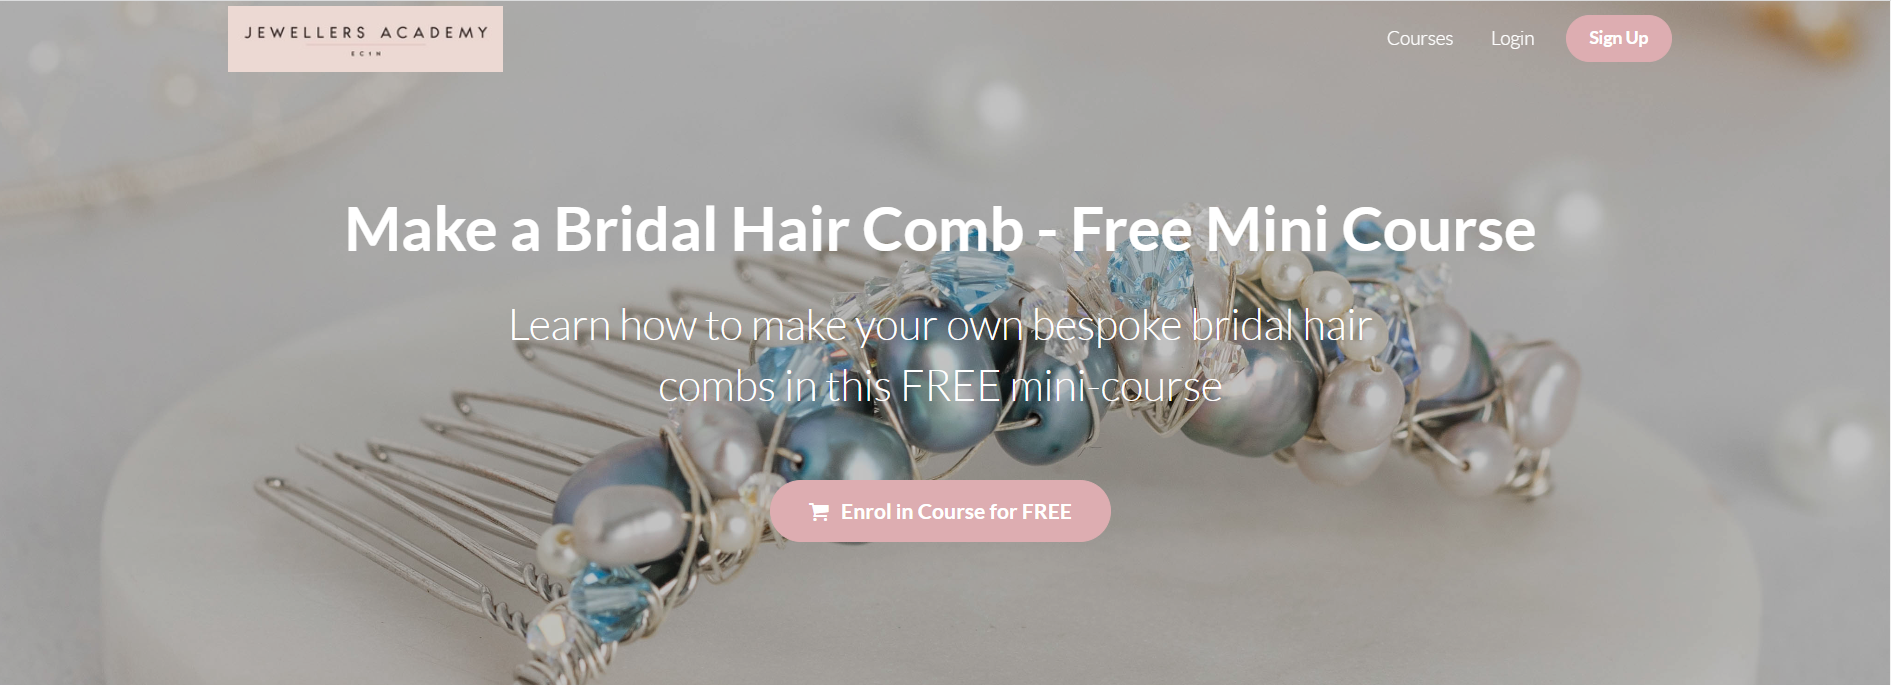 Make a Bridal Hair Comb